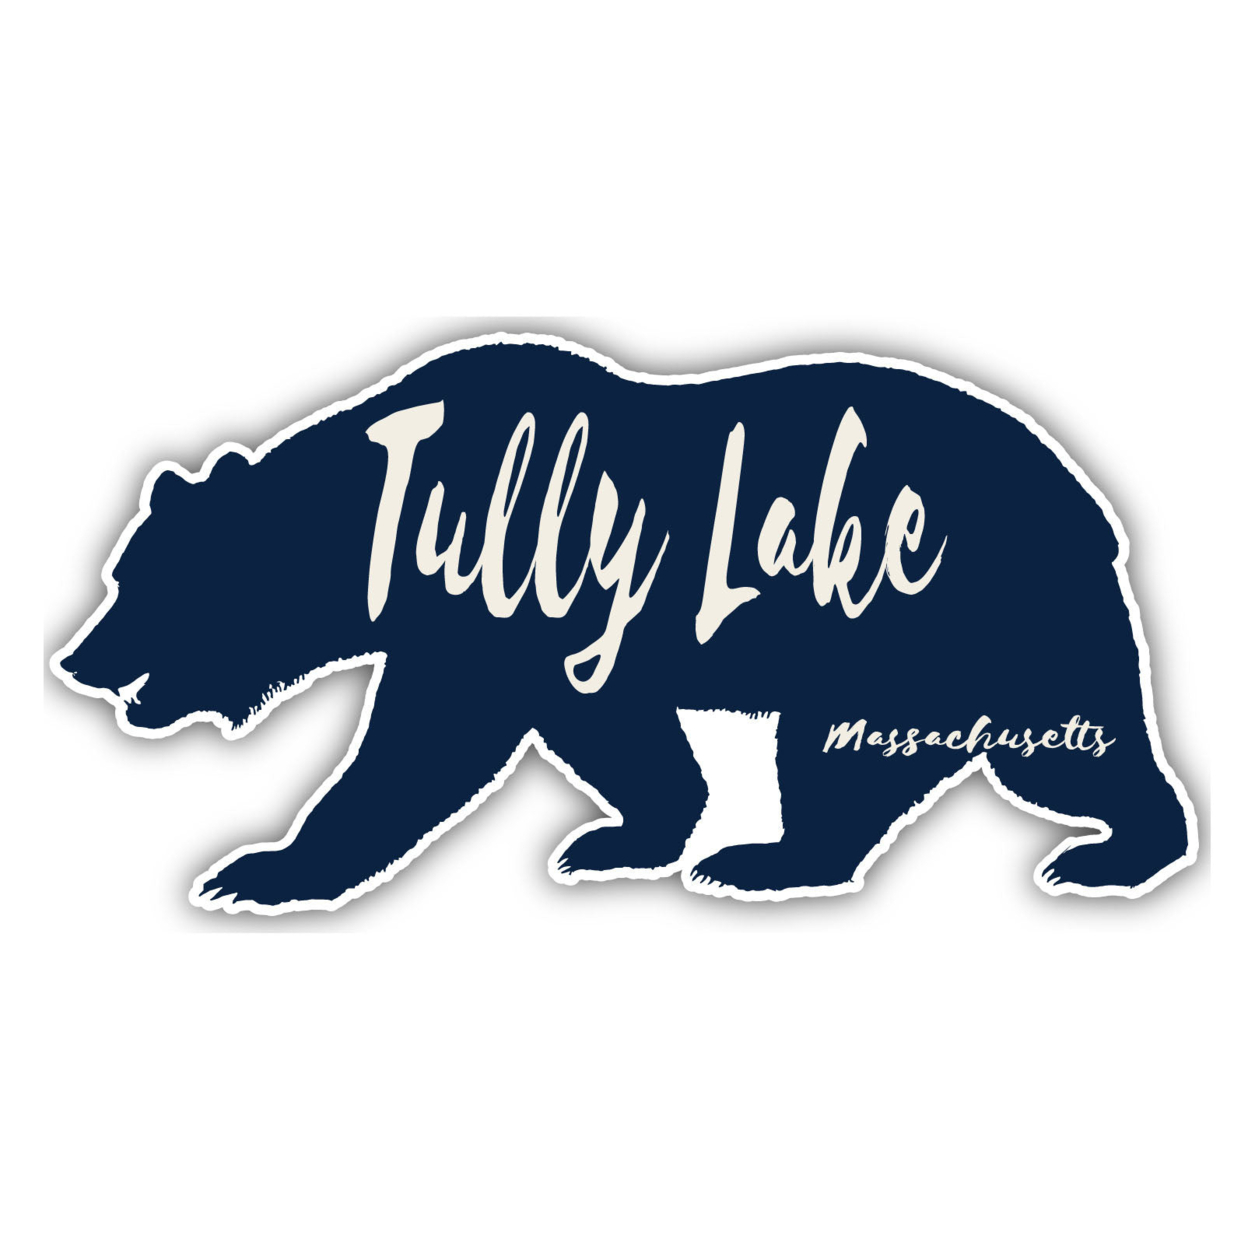 Tully Lake Massachusetts Souvenir Decorative Stickers (Choose Theme And Size) - Single Unit, 2-Inch, Bear